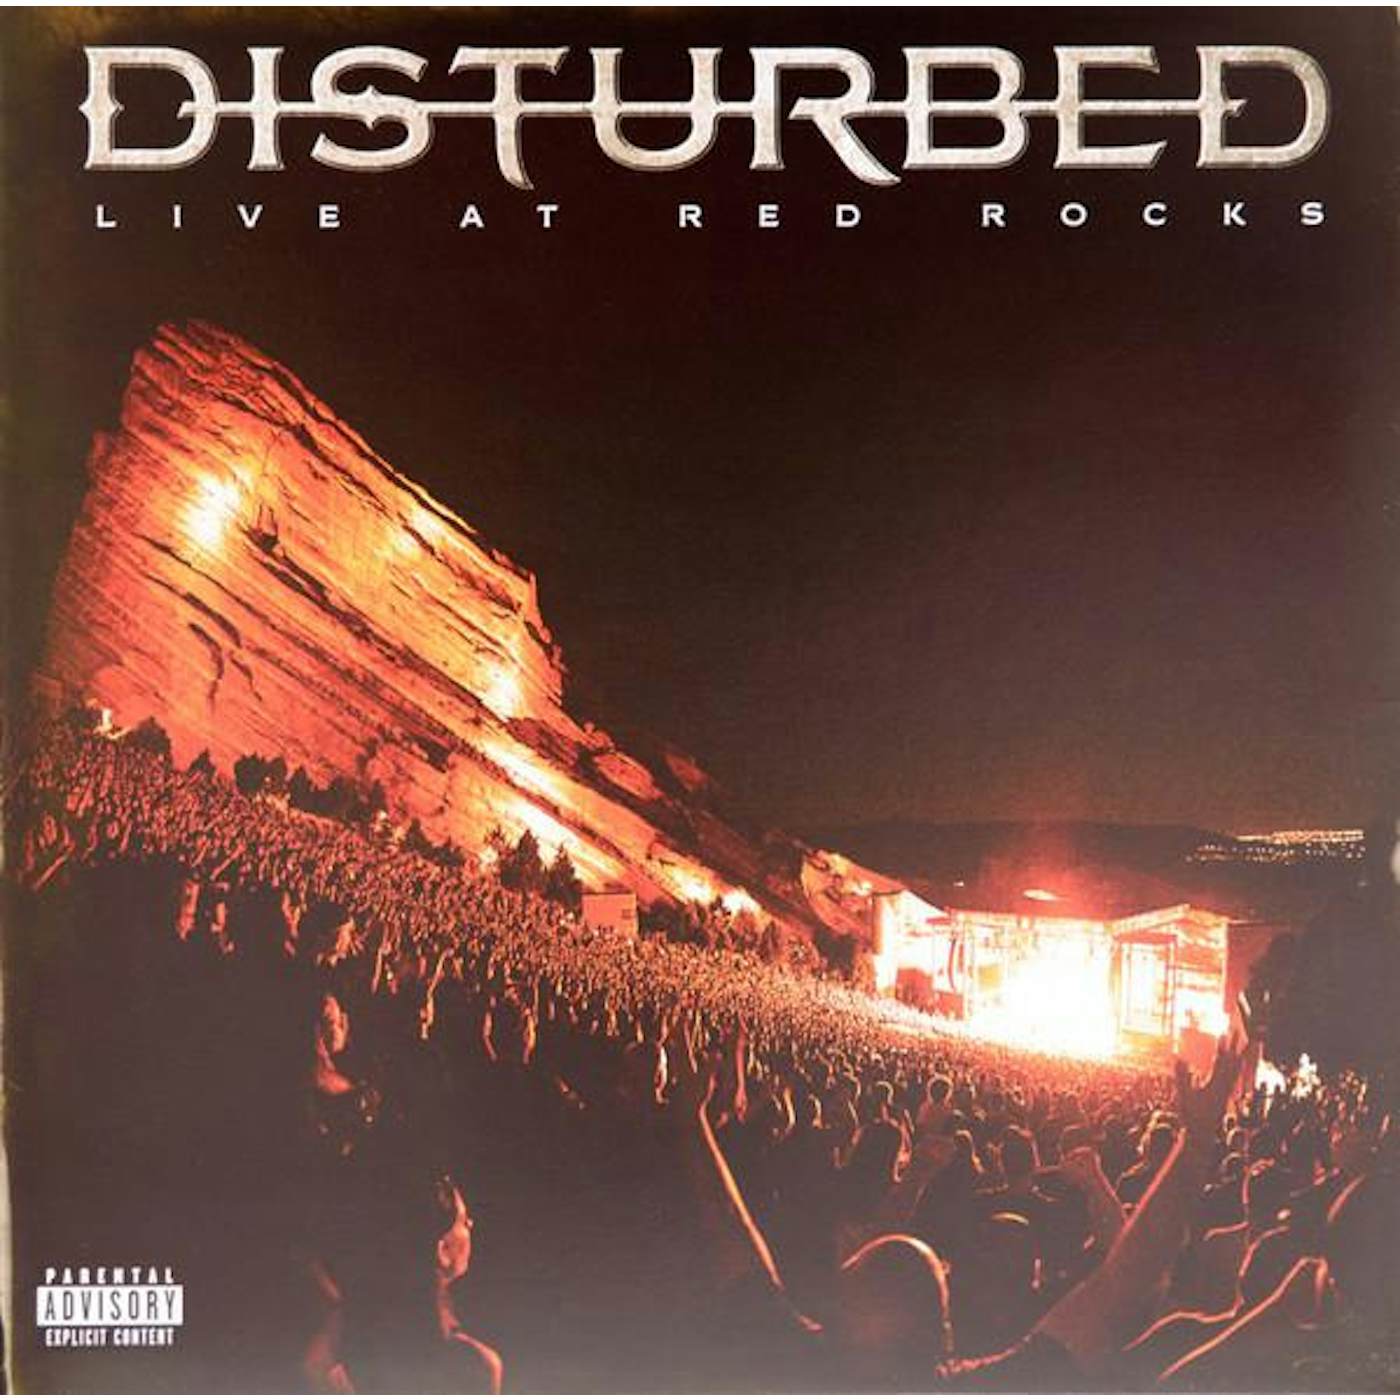 DISTURBED - LIVE AT RED ROCKS (X) Vinyl Record